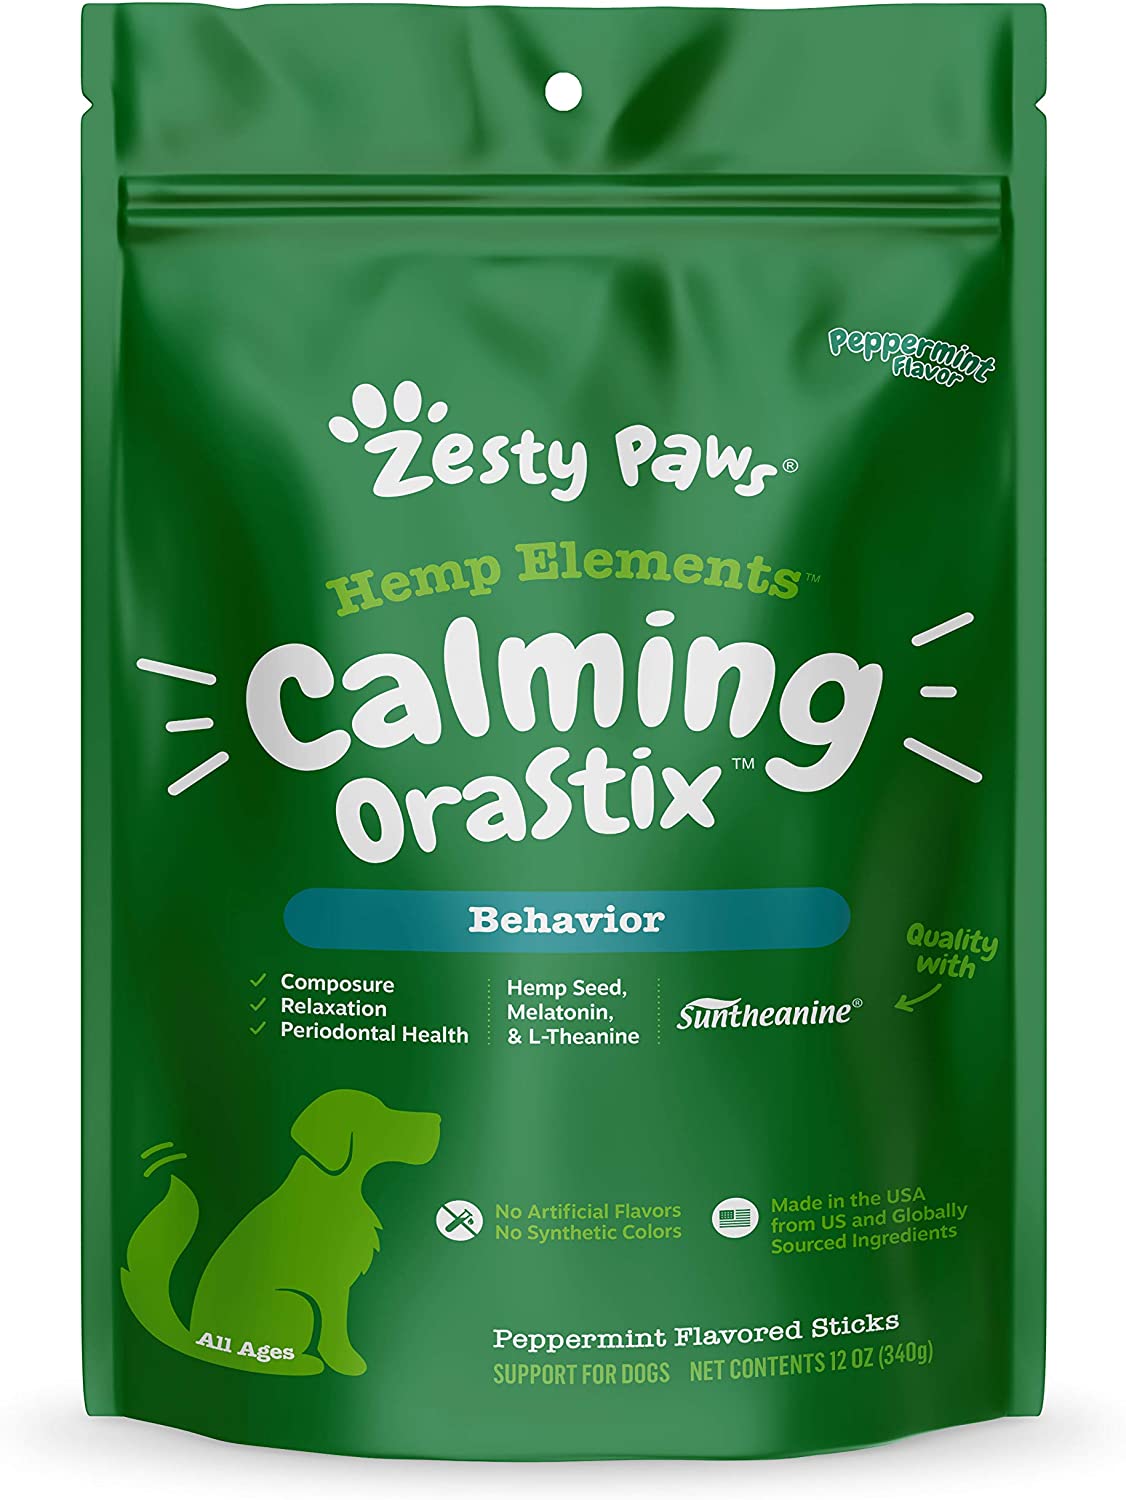 Zesty Paws Hemp Elements Calming Nutrastix Behavior Dog Supplement